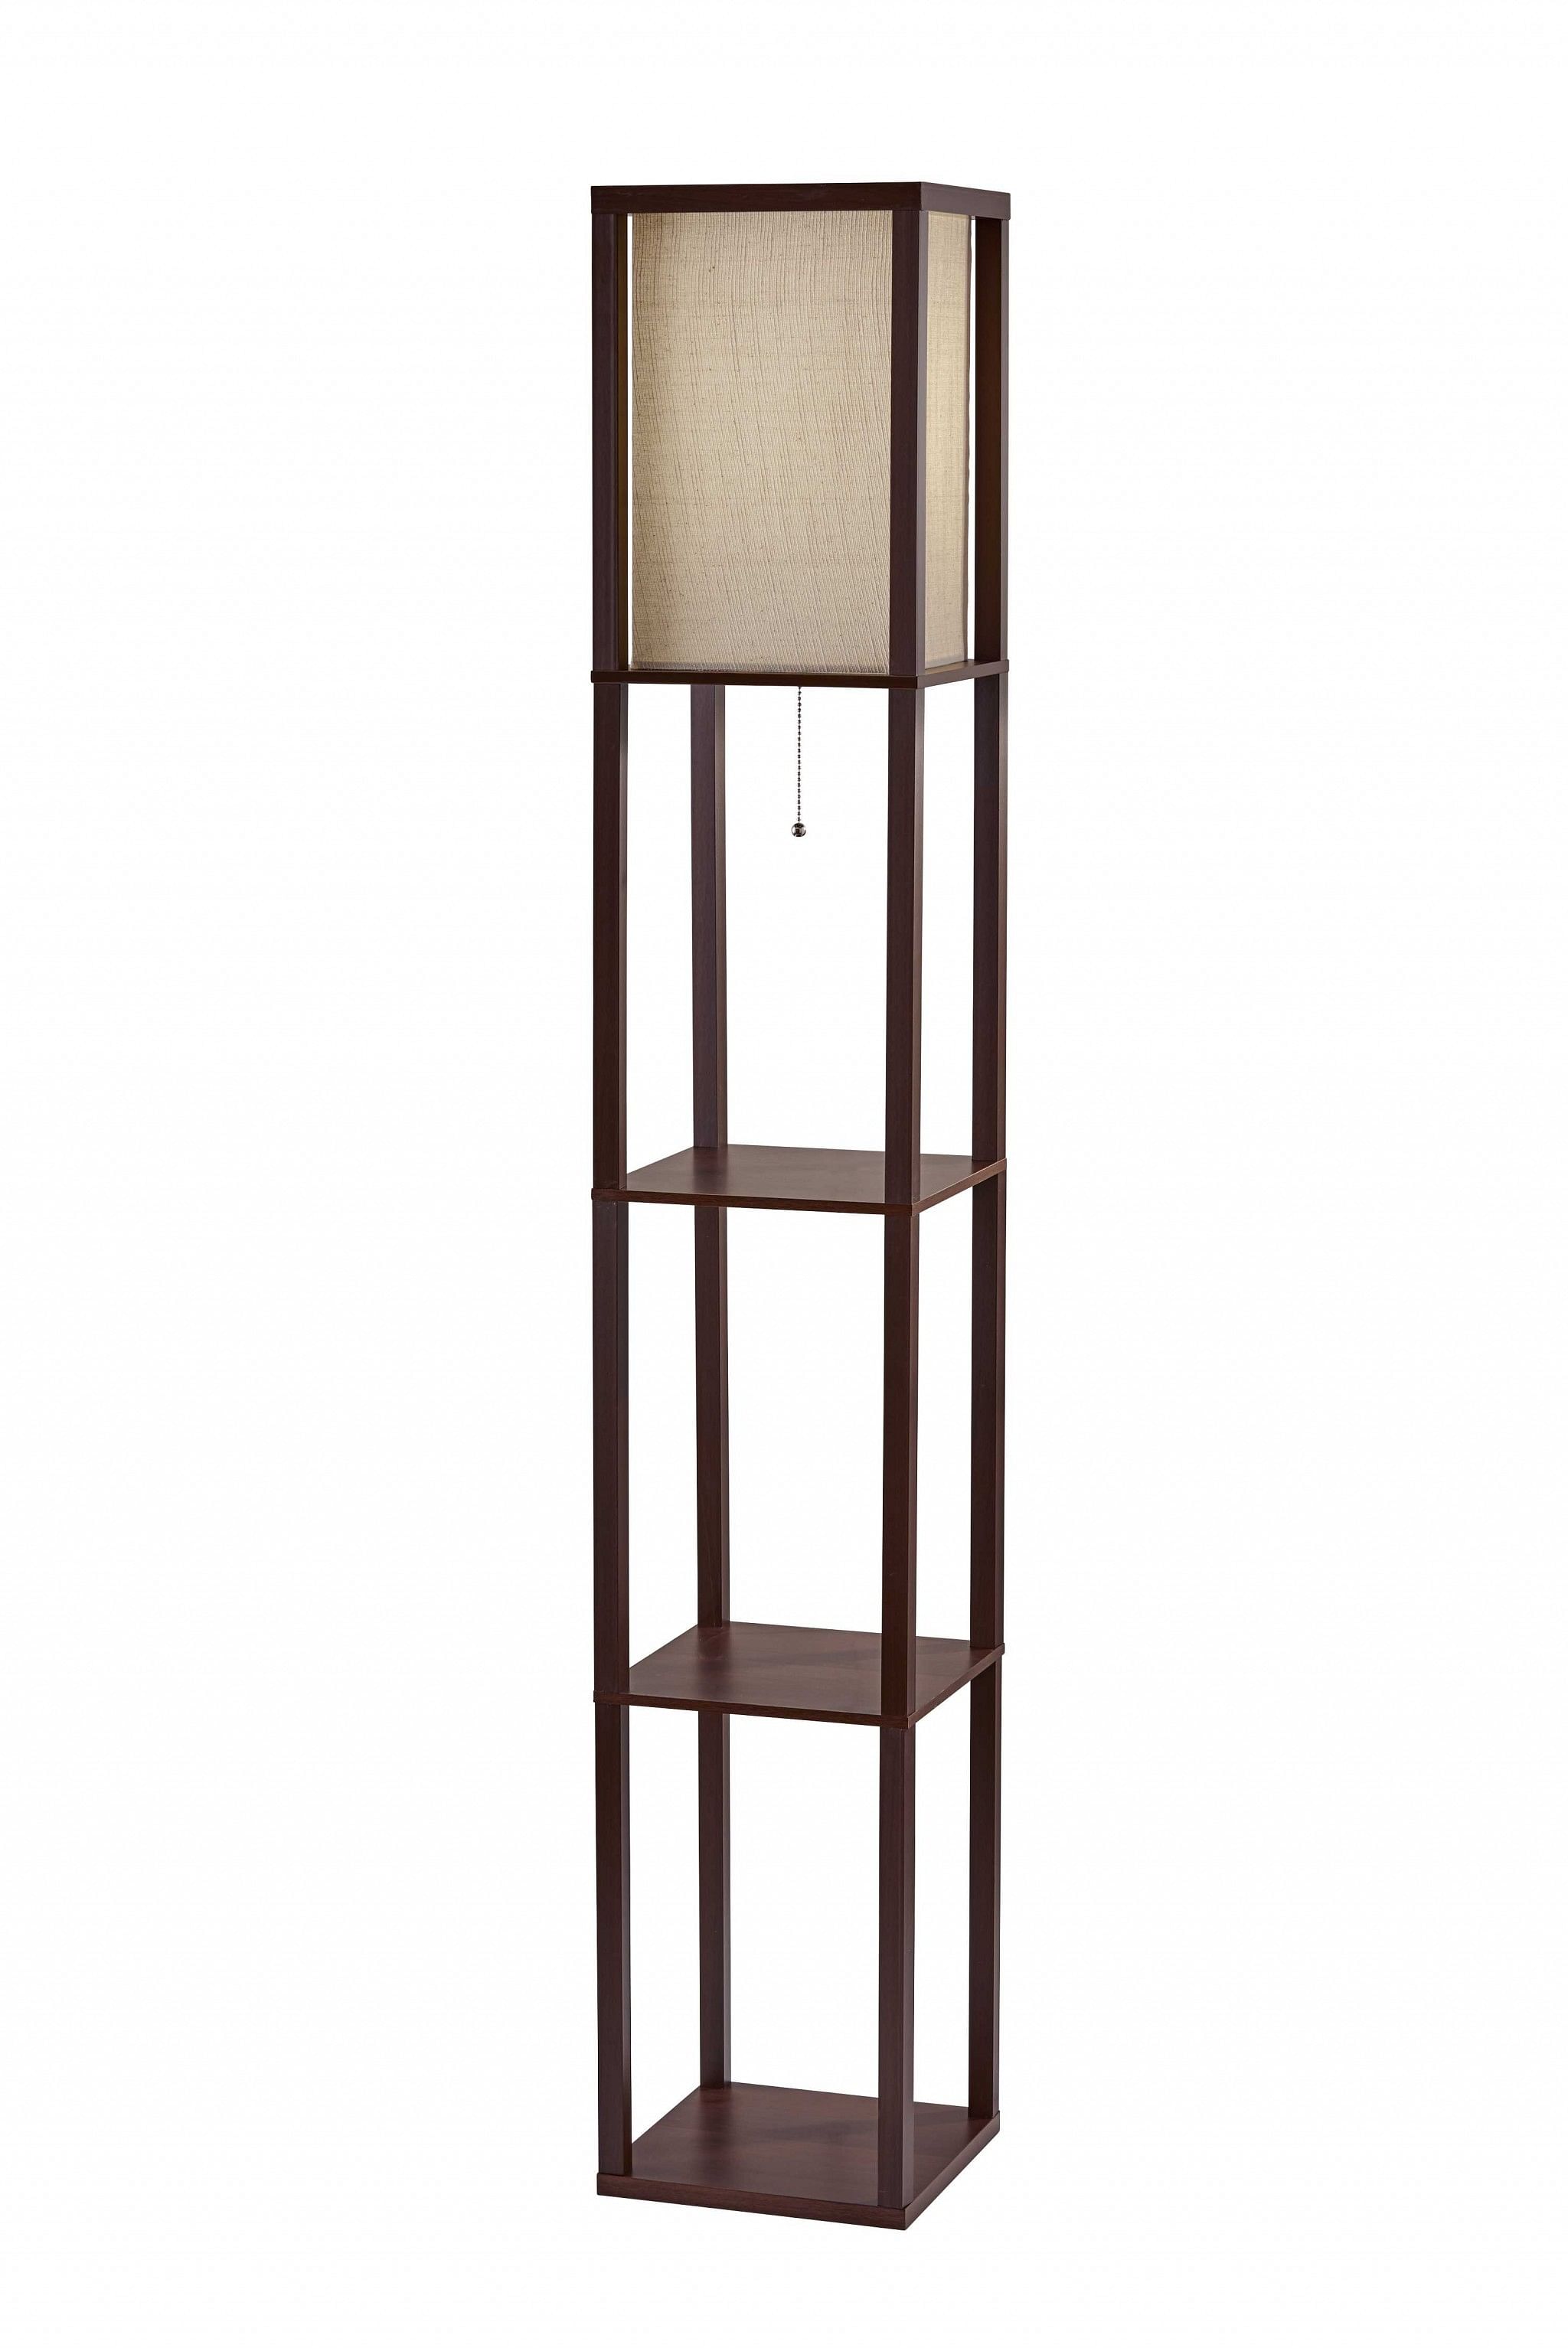 Floor Lamp Walnut Wood Finish Storage Shelves